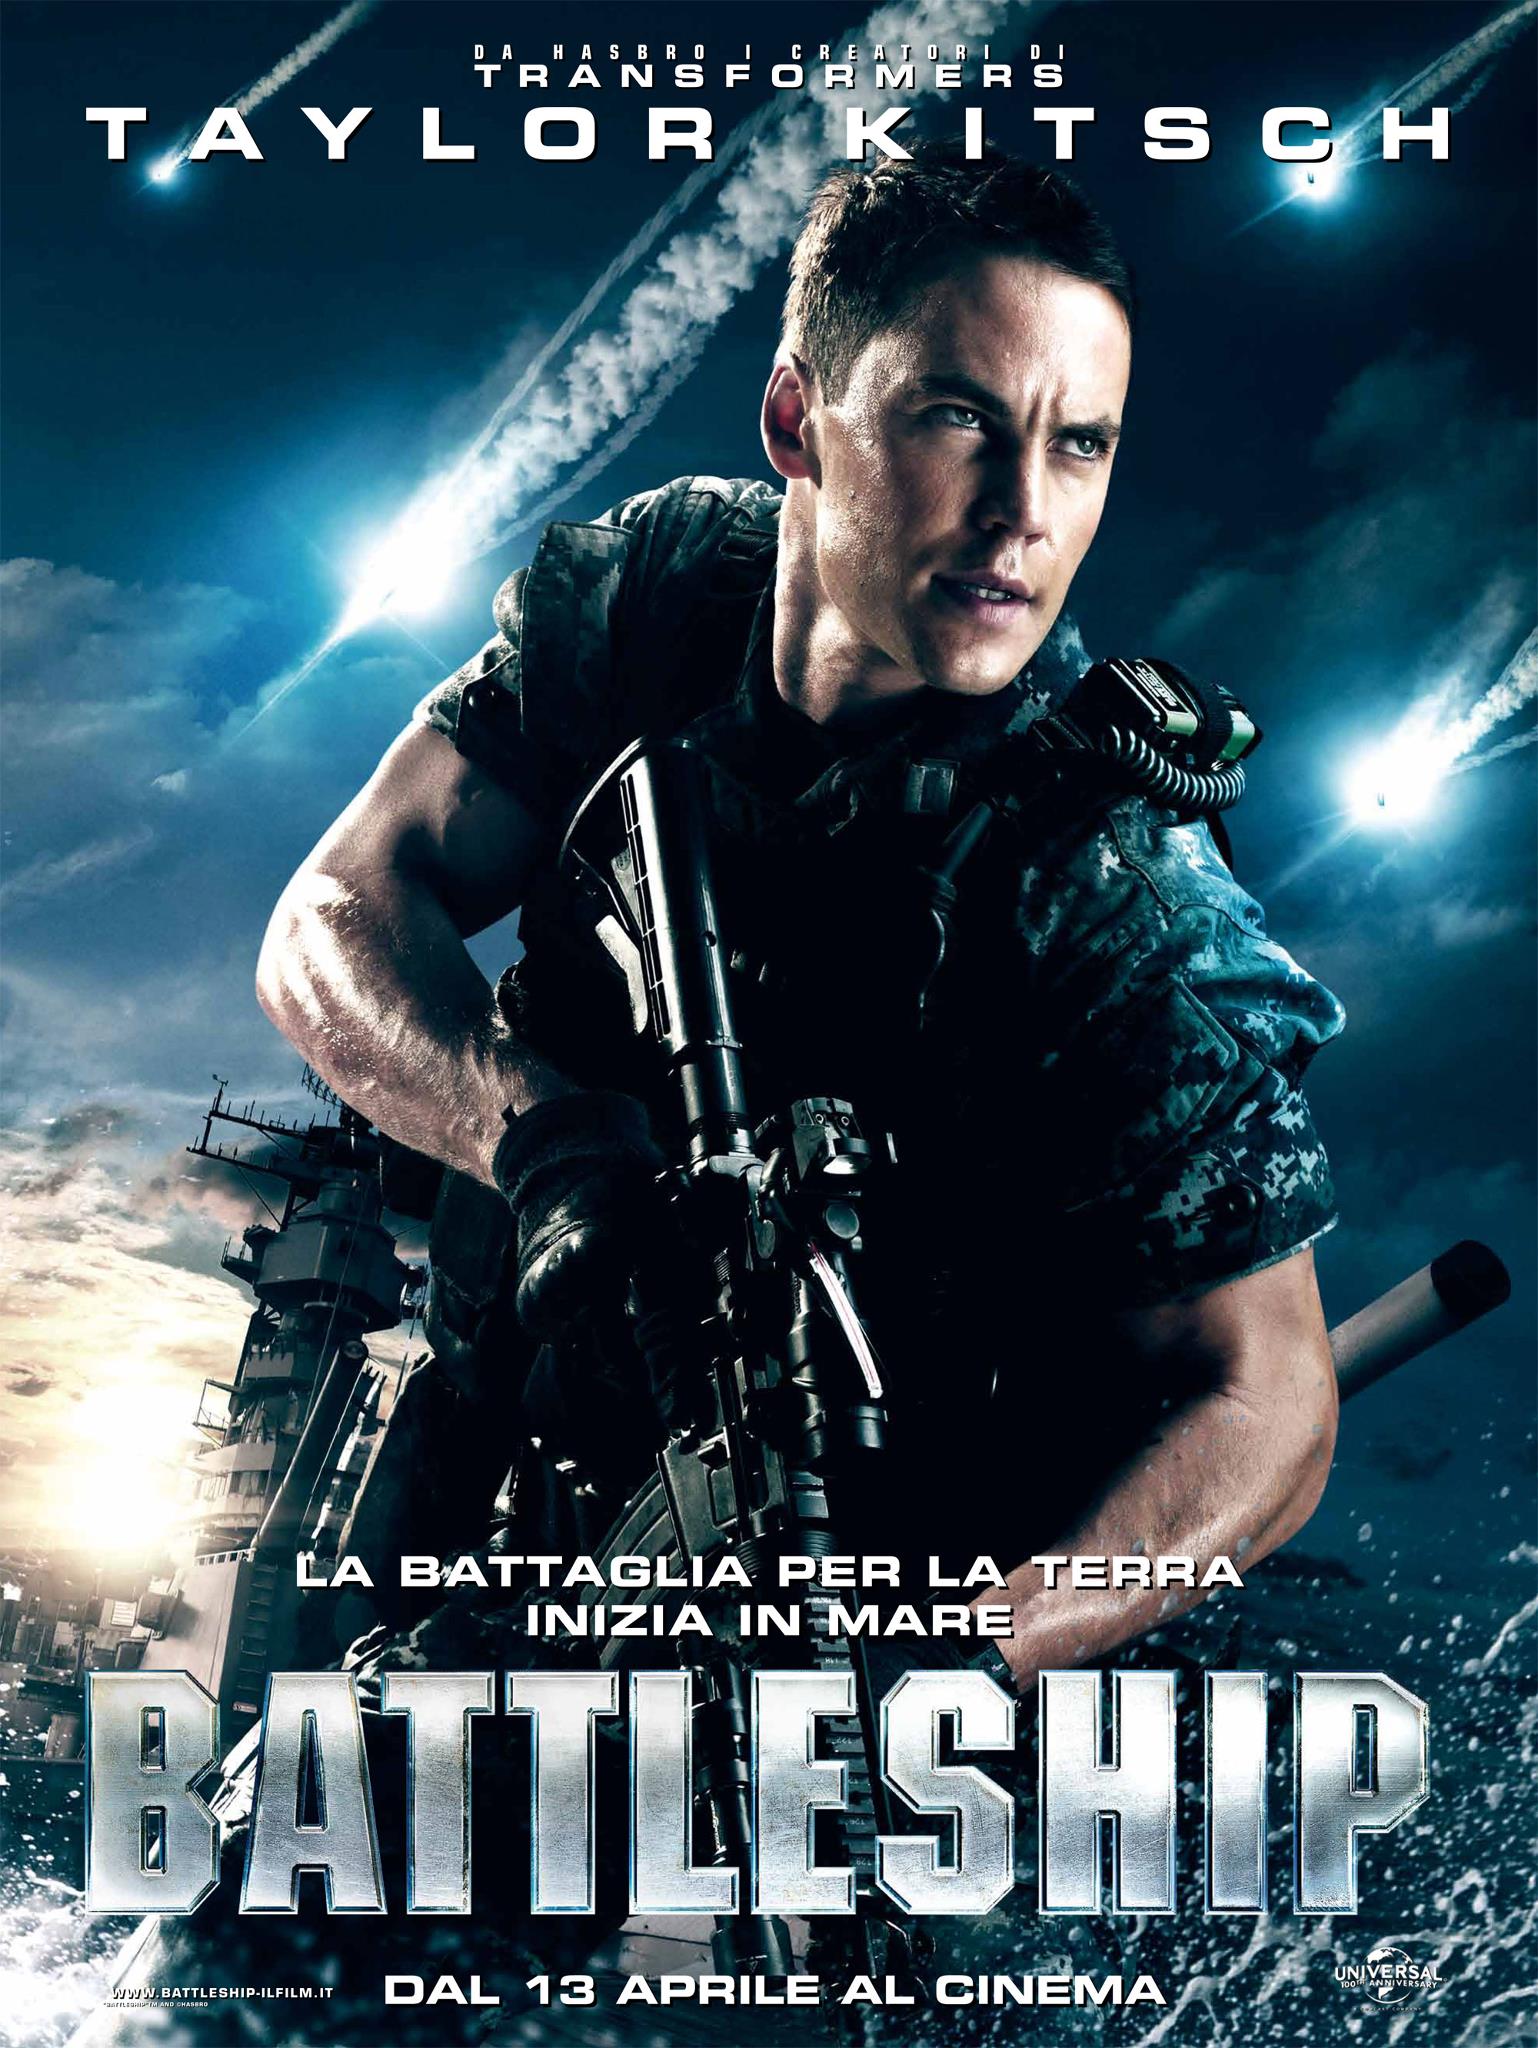 Battleship (2012) Posters (2 of 10)